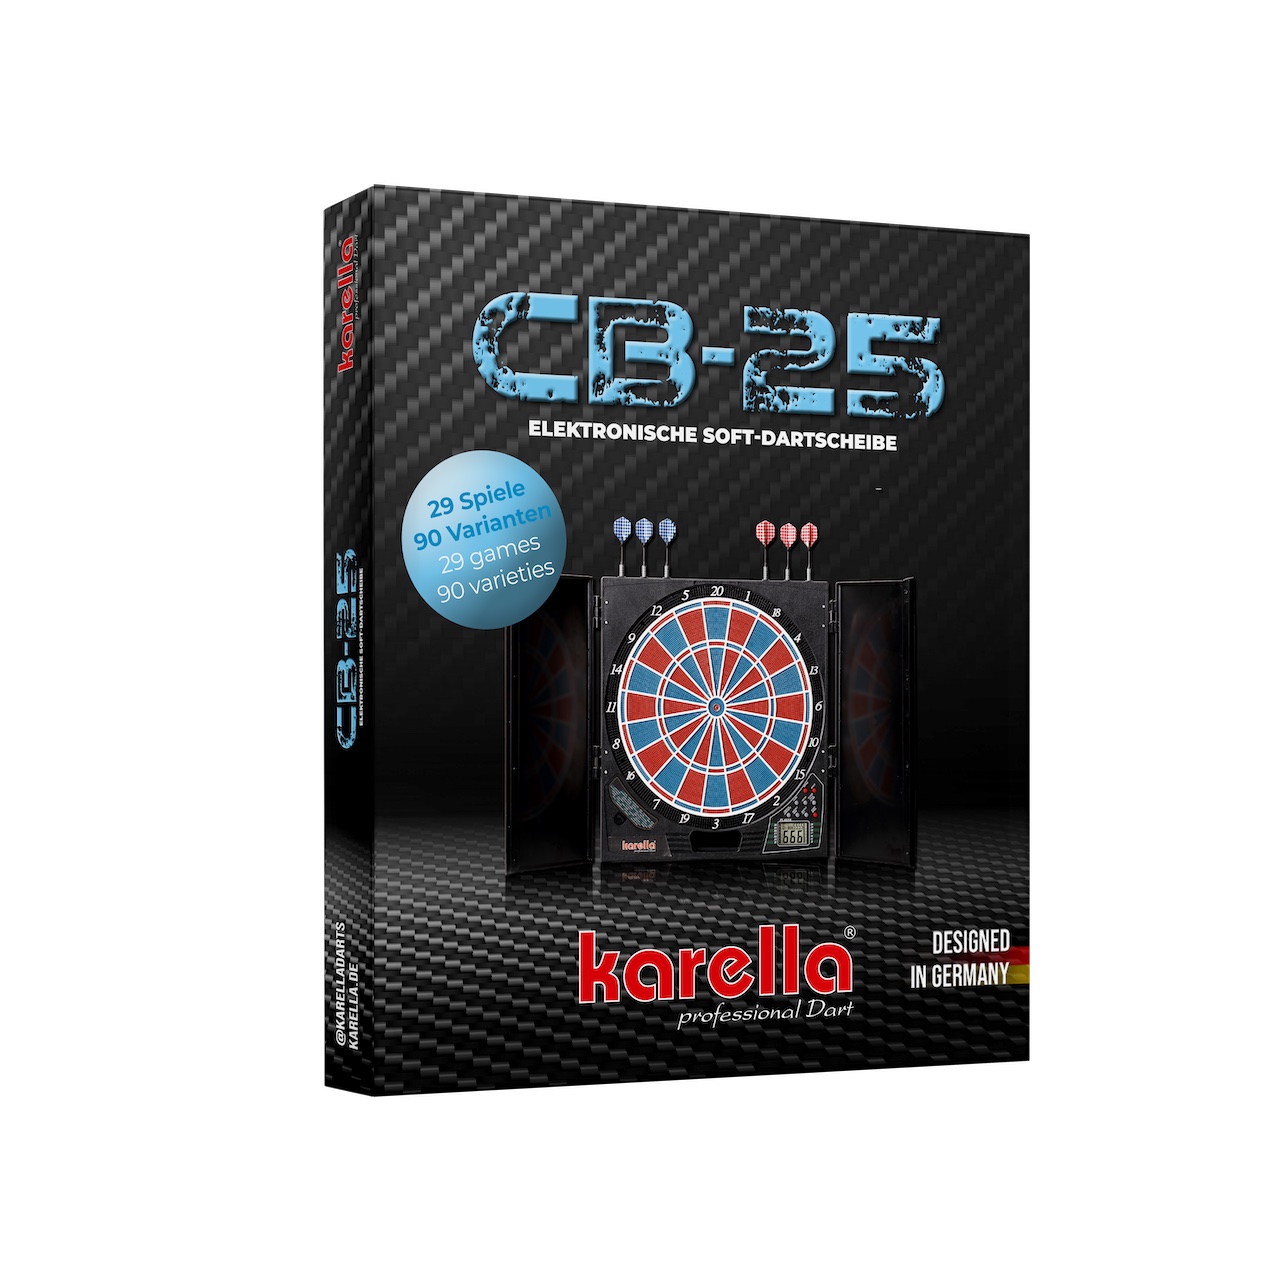 Karella CB 25 dart machine with cabinet